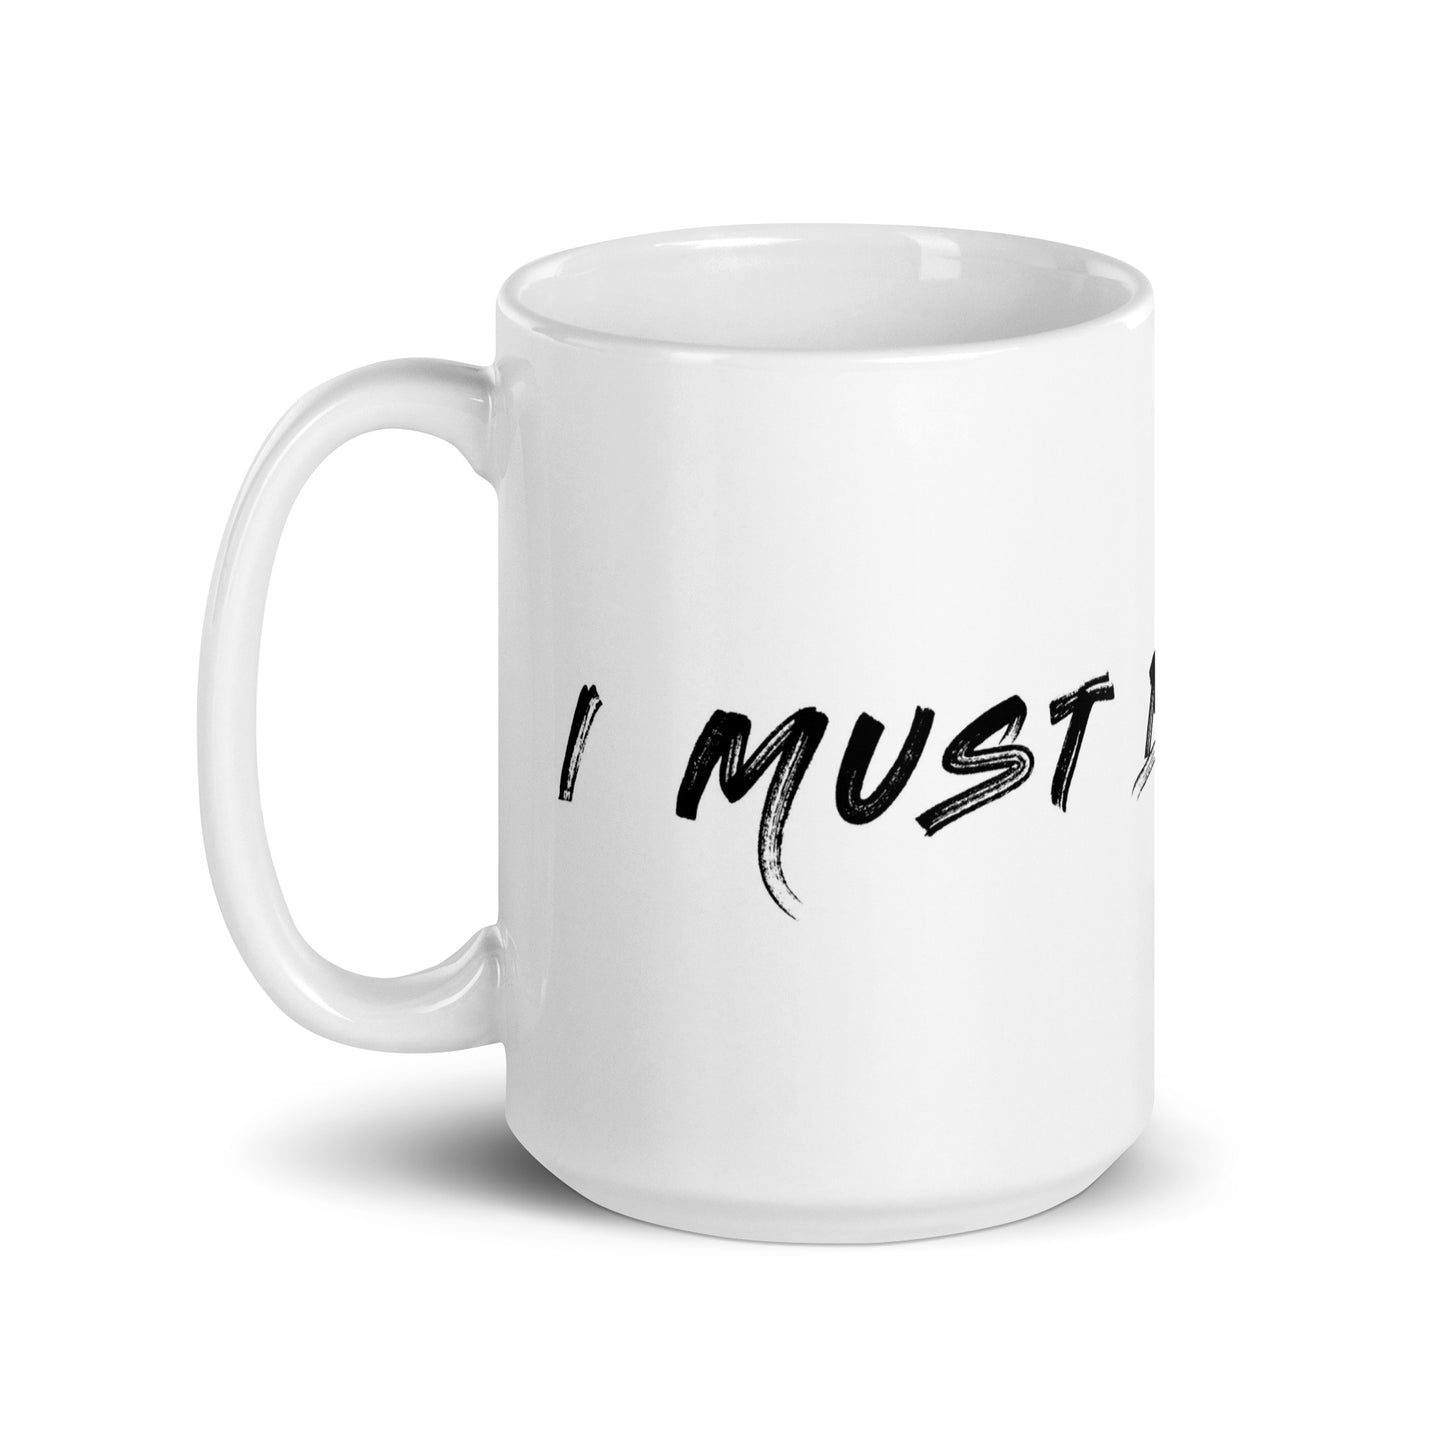 White Glossy Mug | 'I MUST BE A MUG'